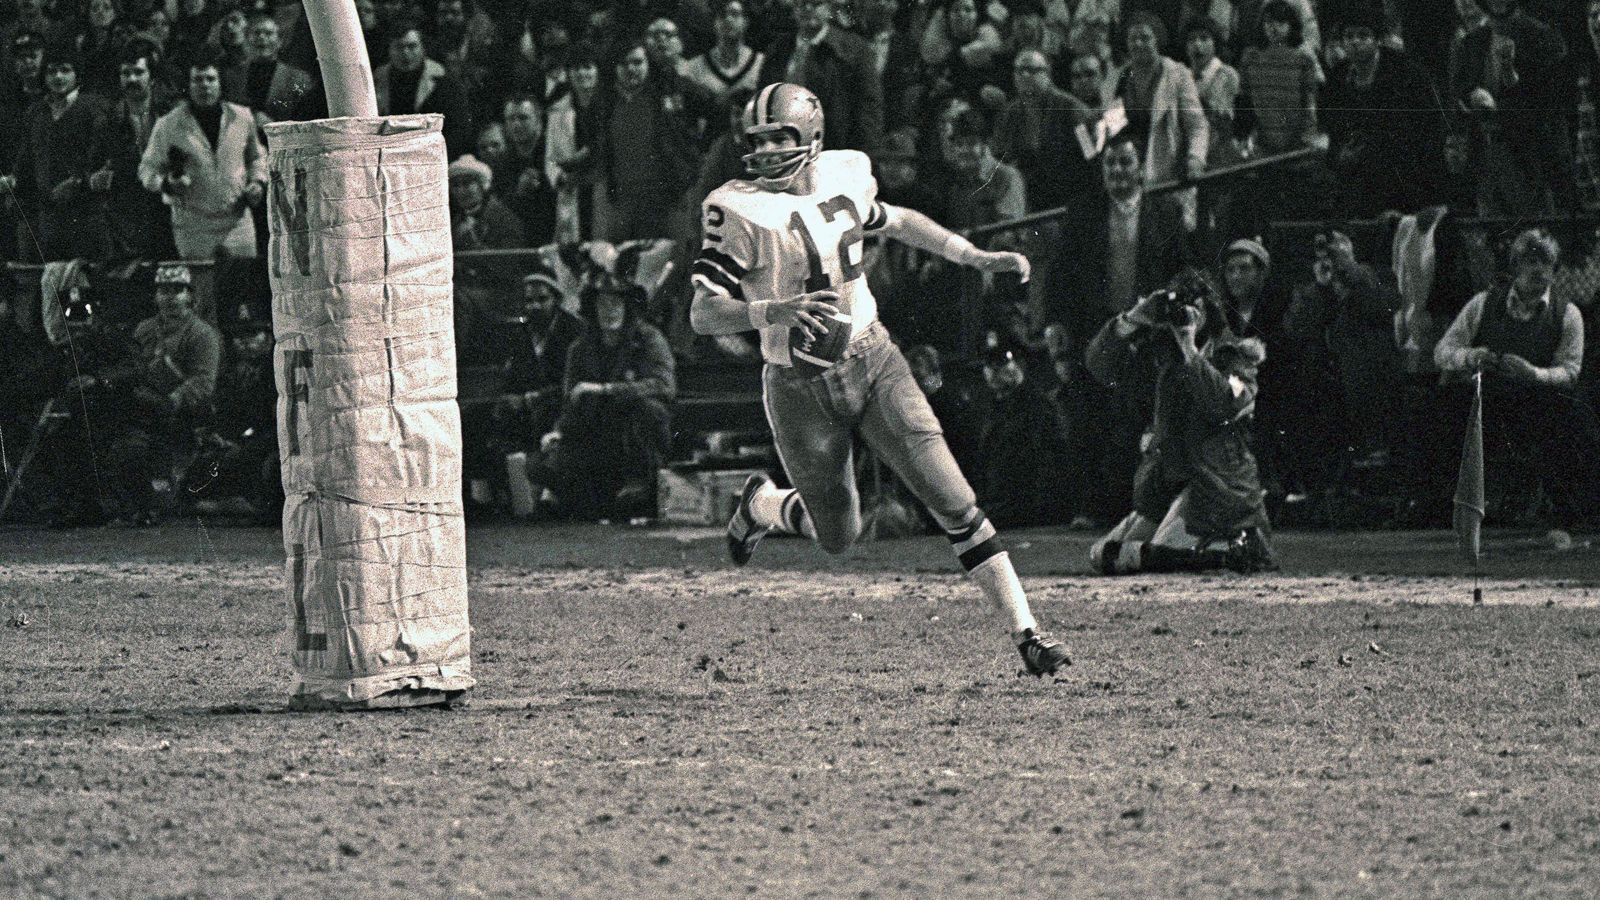 
                <strong>Roger Staubach</strong><br>
                Aktiv: 1969 - 1979Position: QuarterbackTeam: Dallas CowboysErfolge: 2x Super Bowl-Sieger, 6x Pro Bowl, Gewinner der Heisman Trophy
              